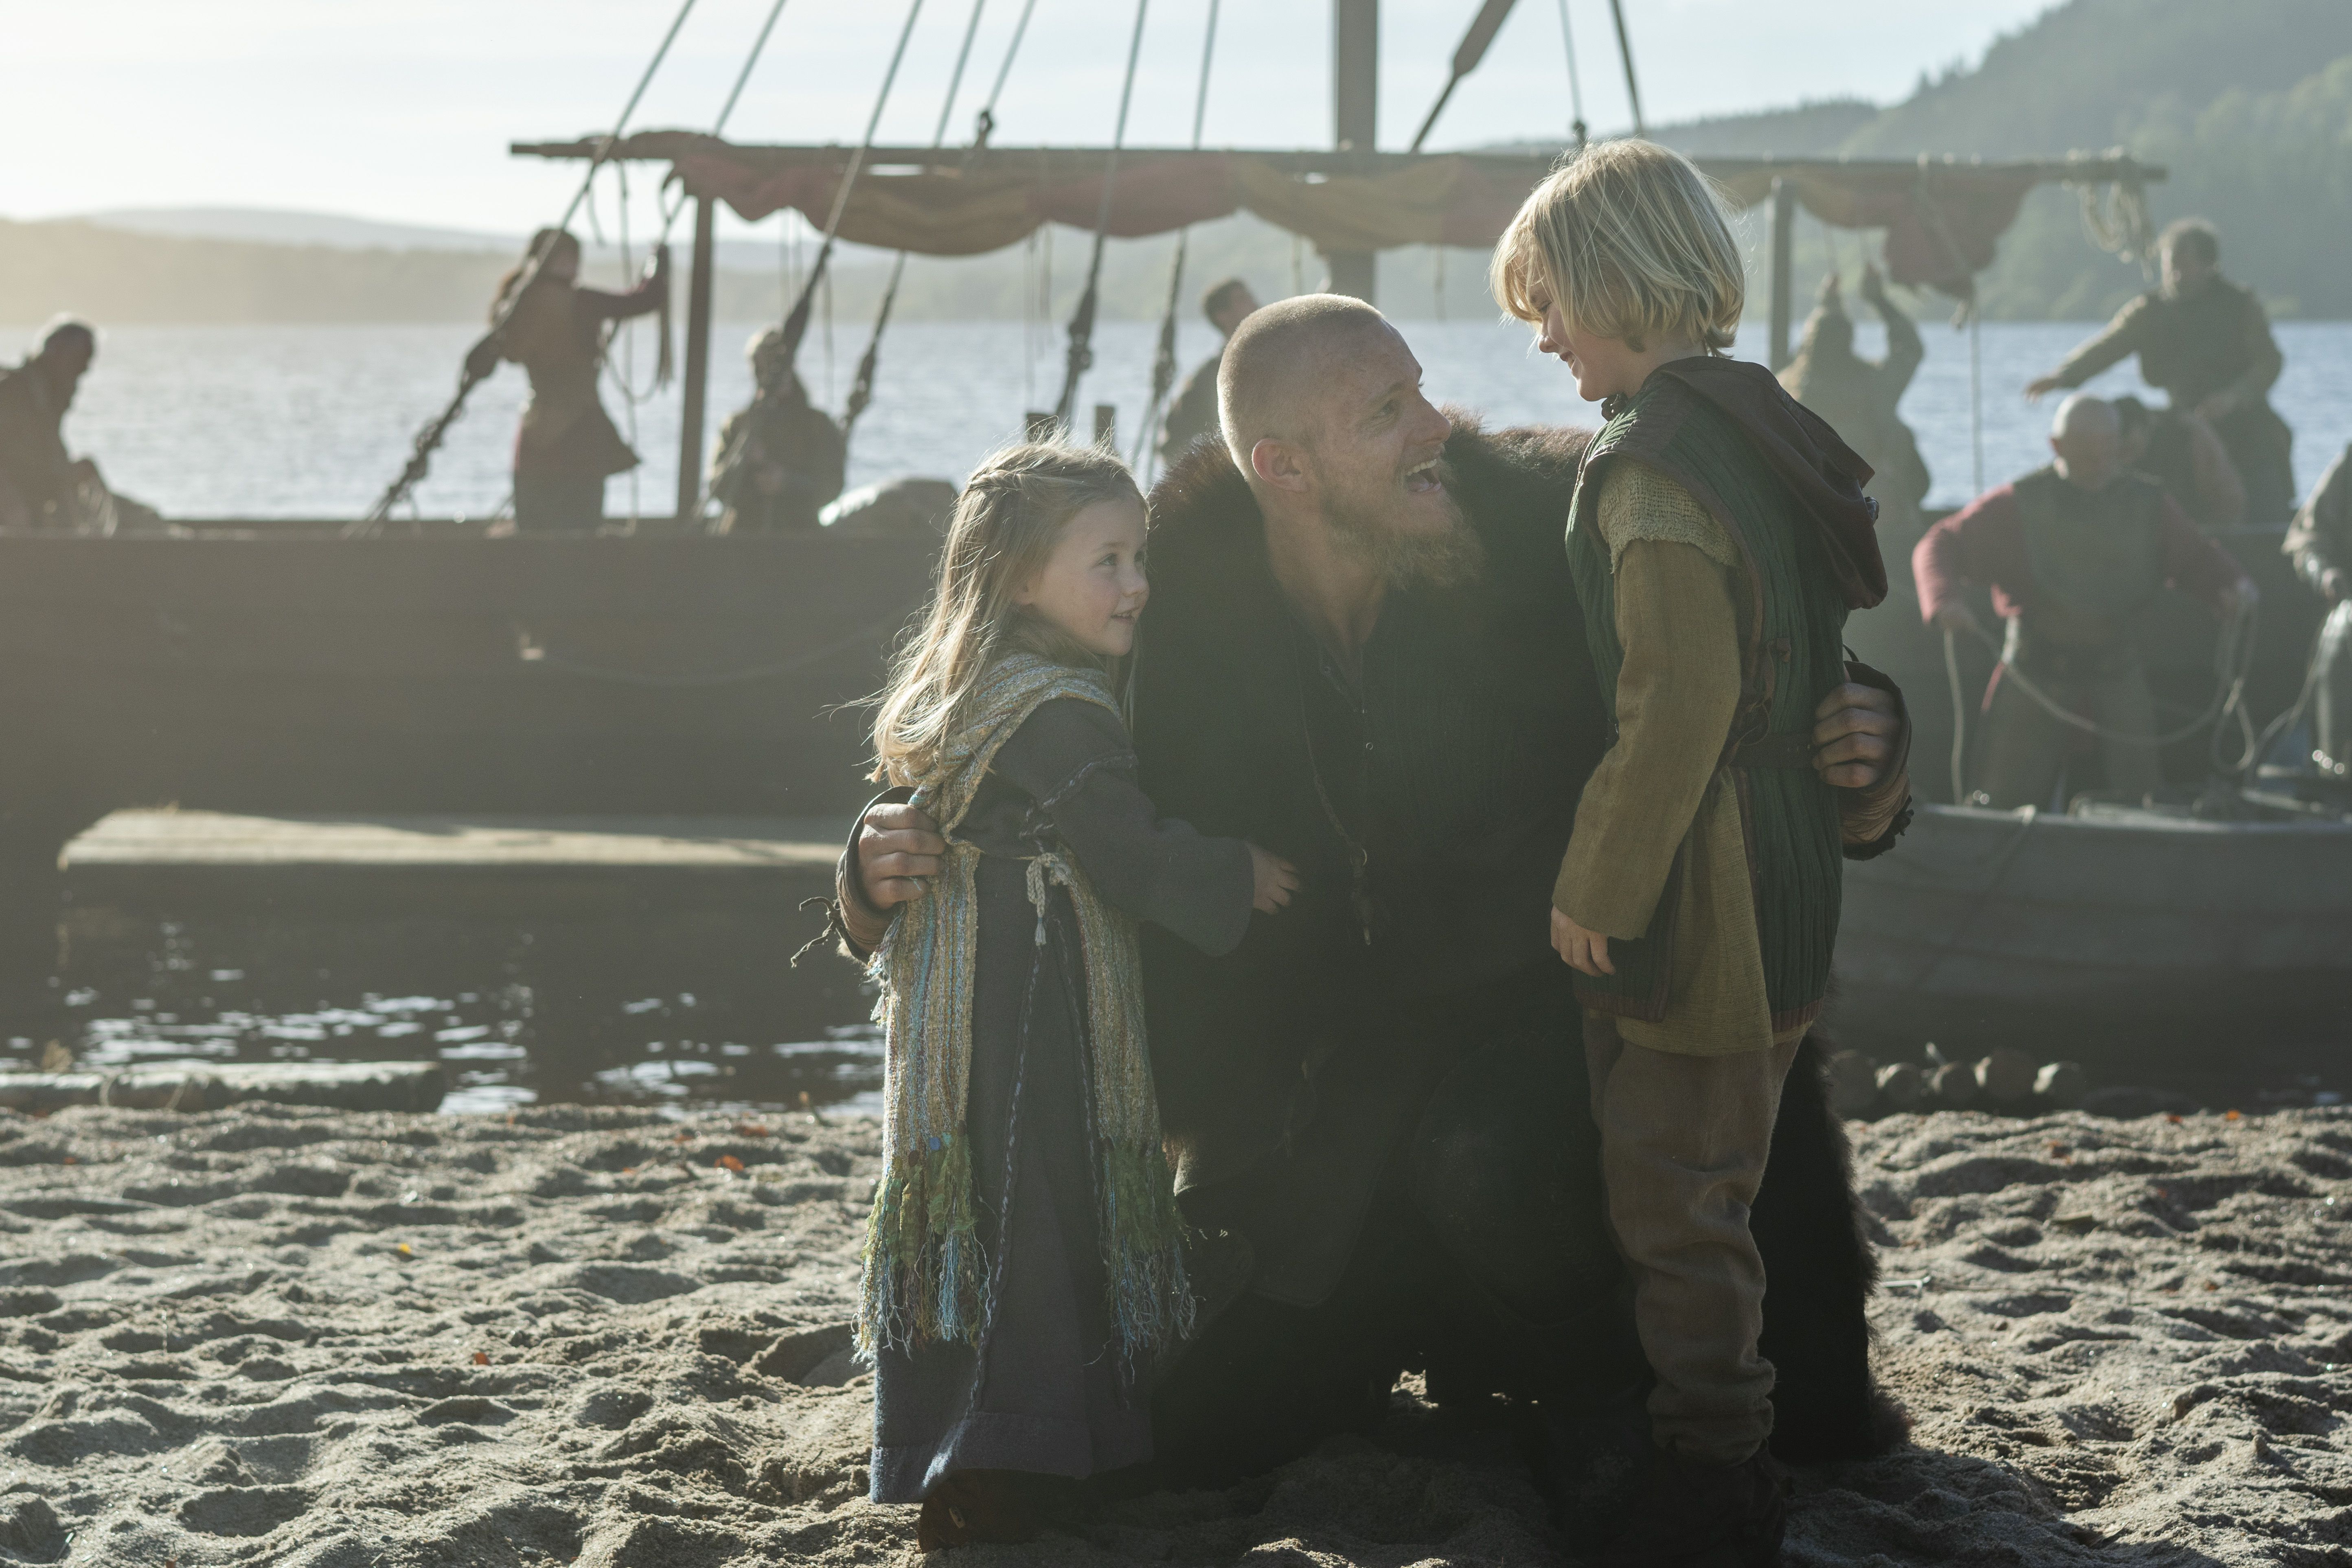 Vikings' Alexander Ludwig Says You'll See Bjorn Again Despite